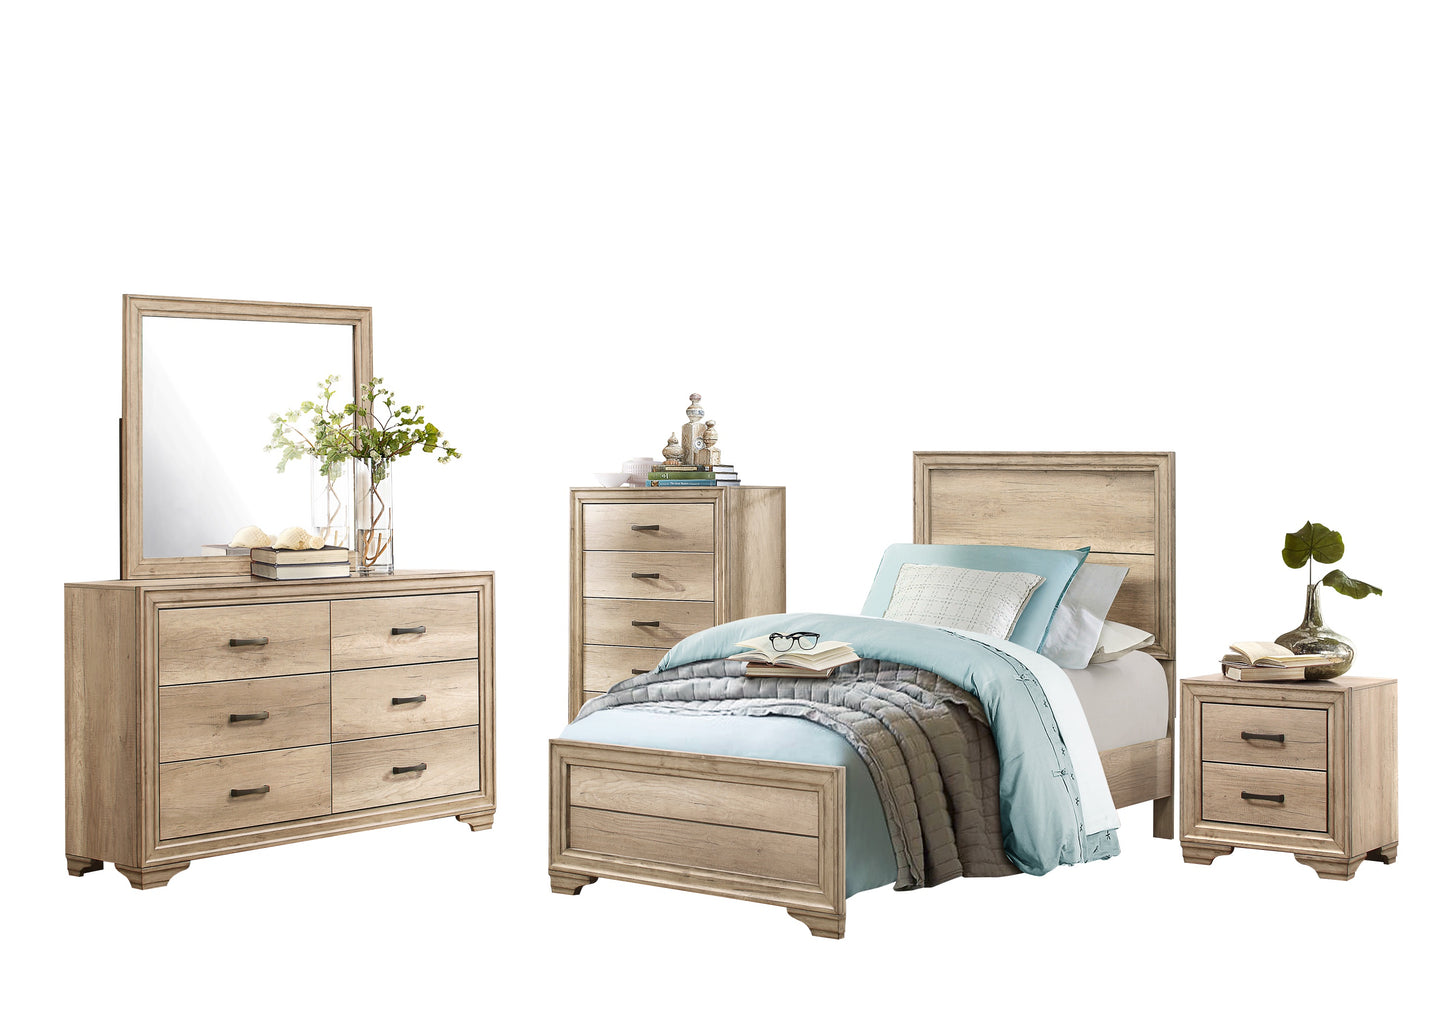 Laudine Rustic Modern 5PC Bedroom Set Twin Bed, Dresser, Mirror, Nightstand, Chest in Weather Industrial Wood